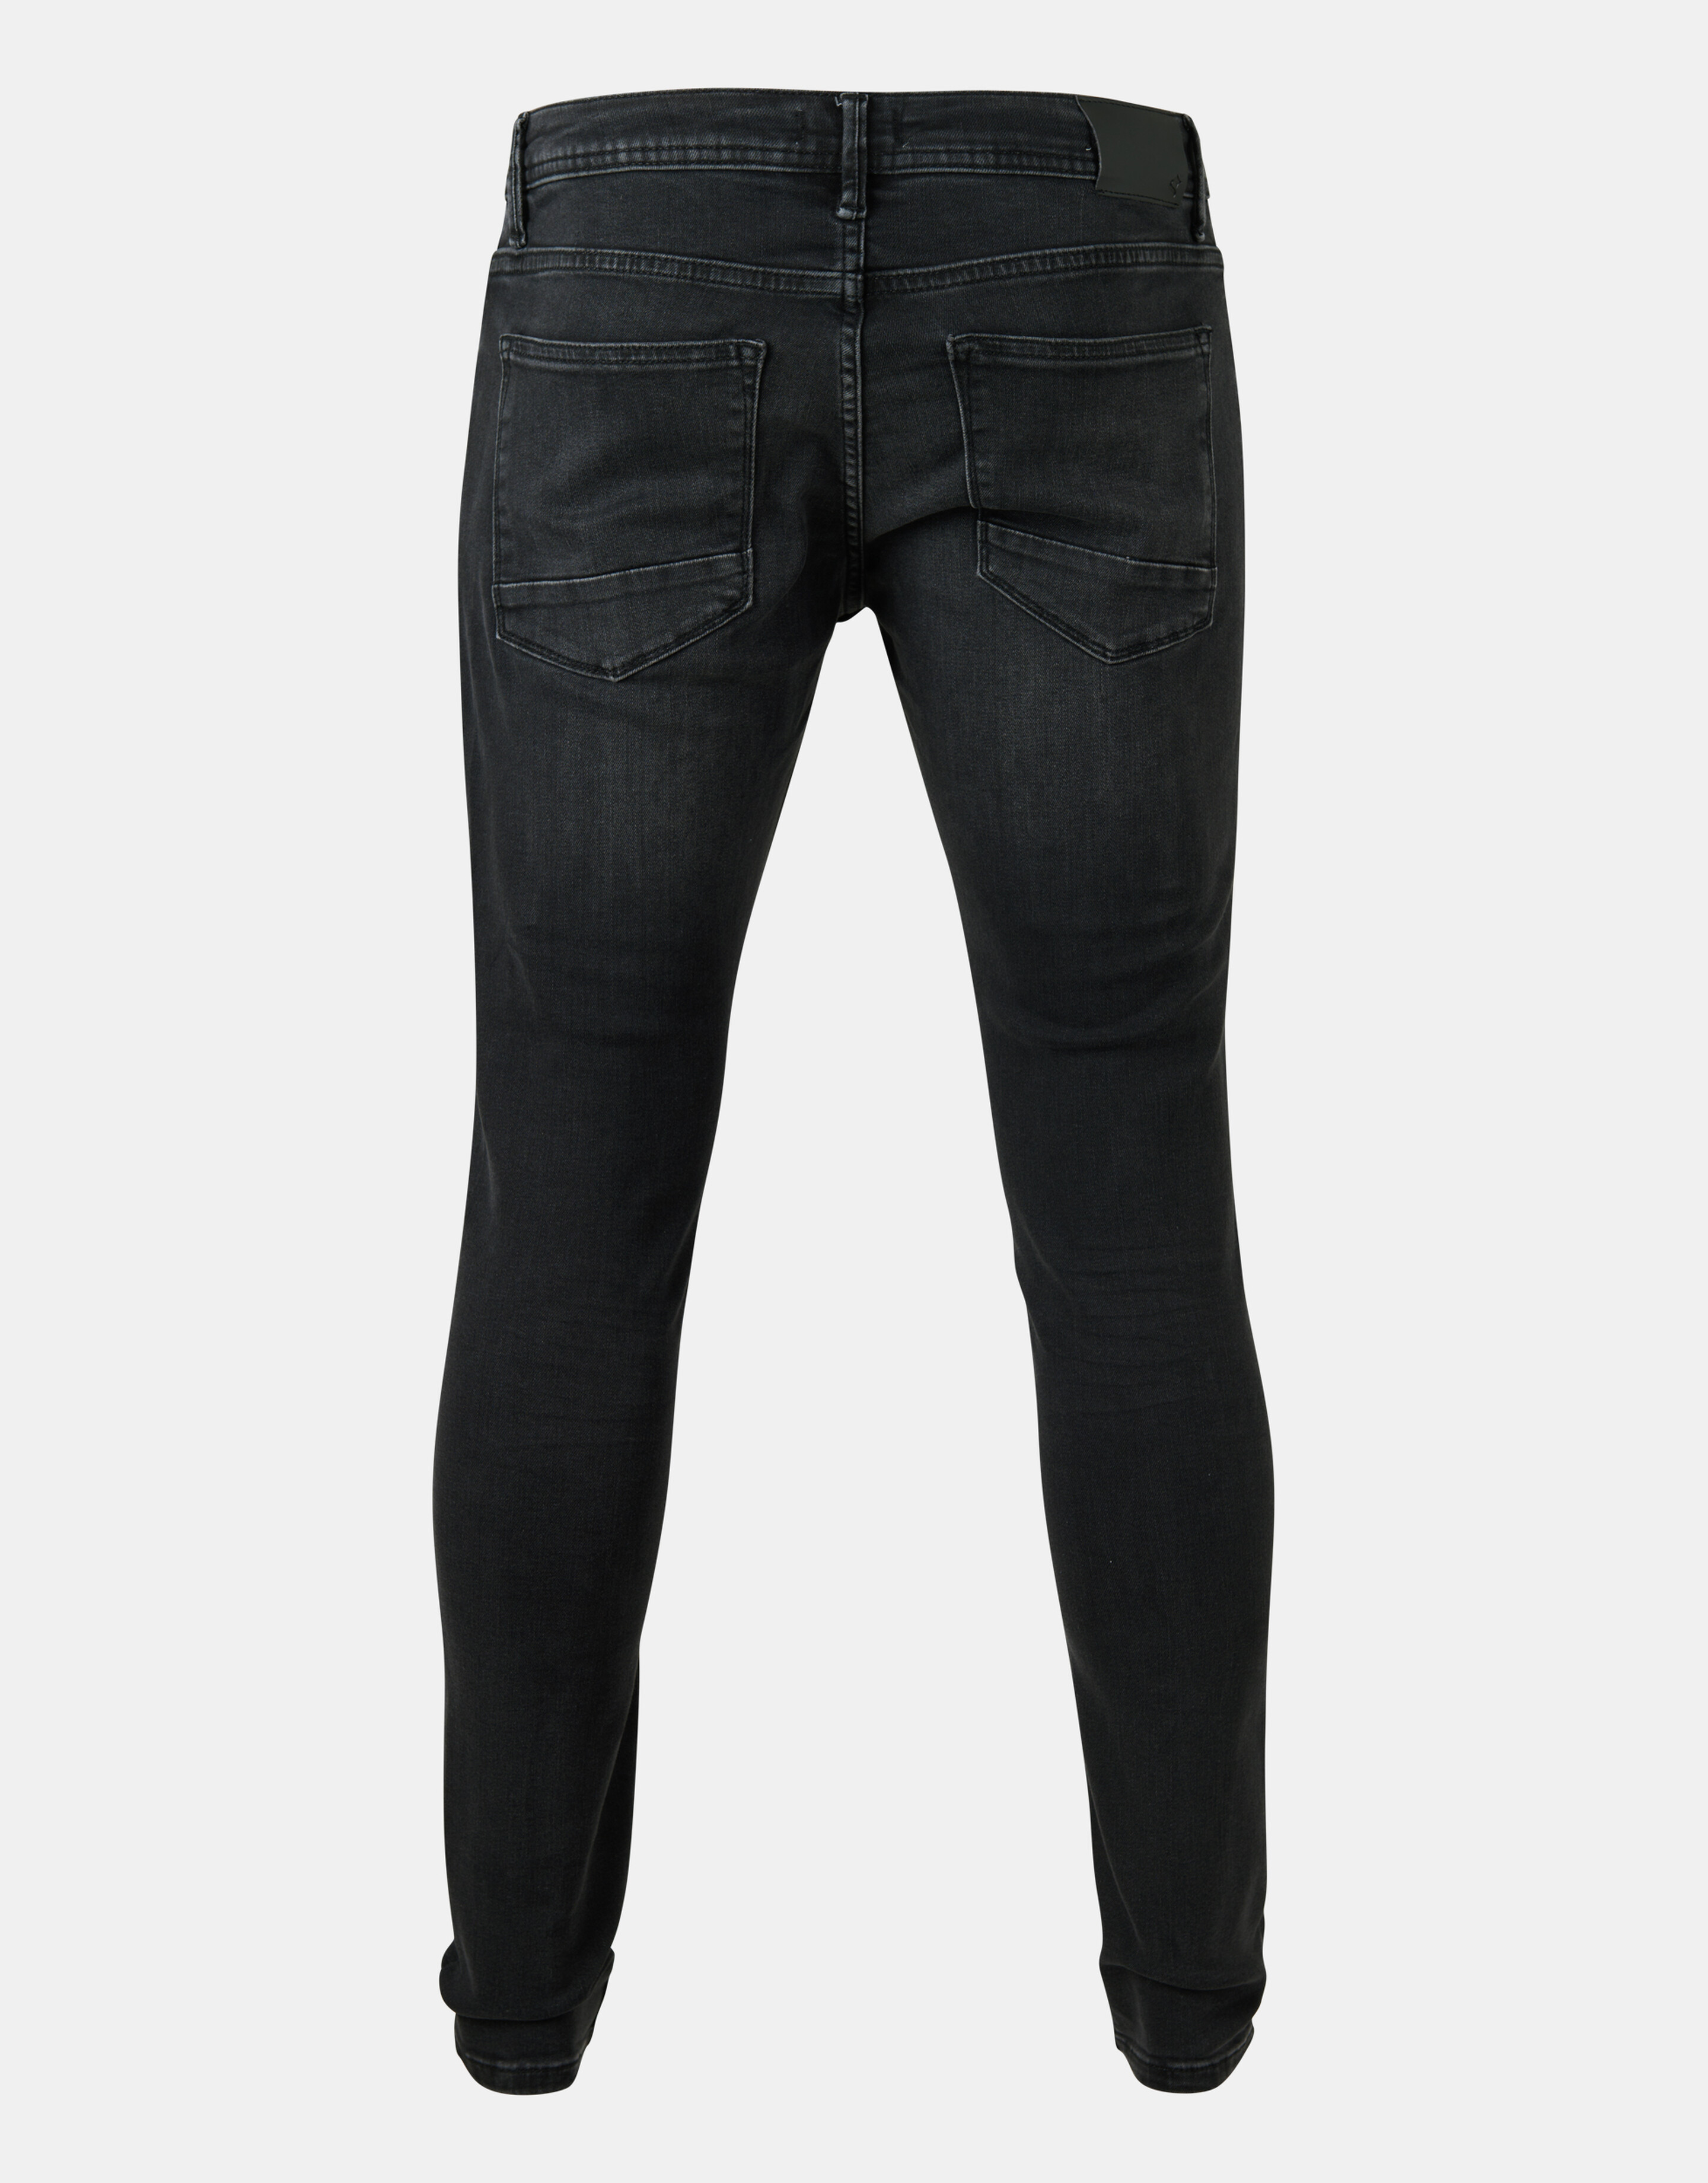 Skinny Jeans Zwart Washed L32 Refill